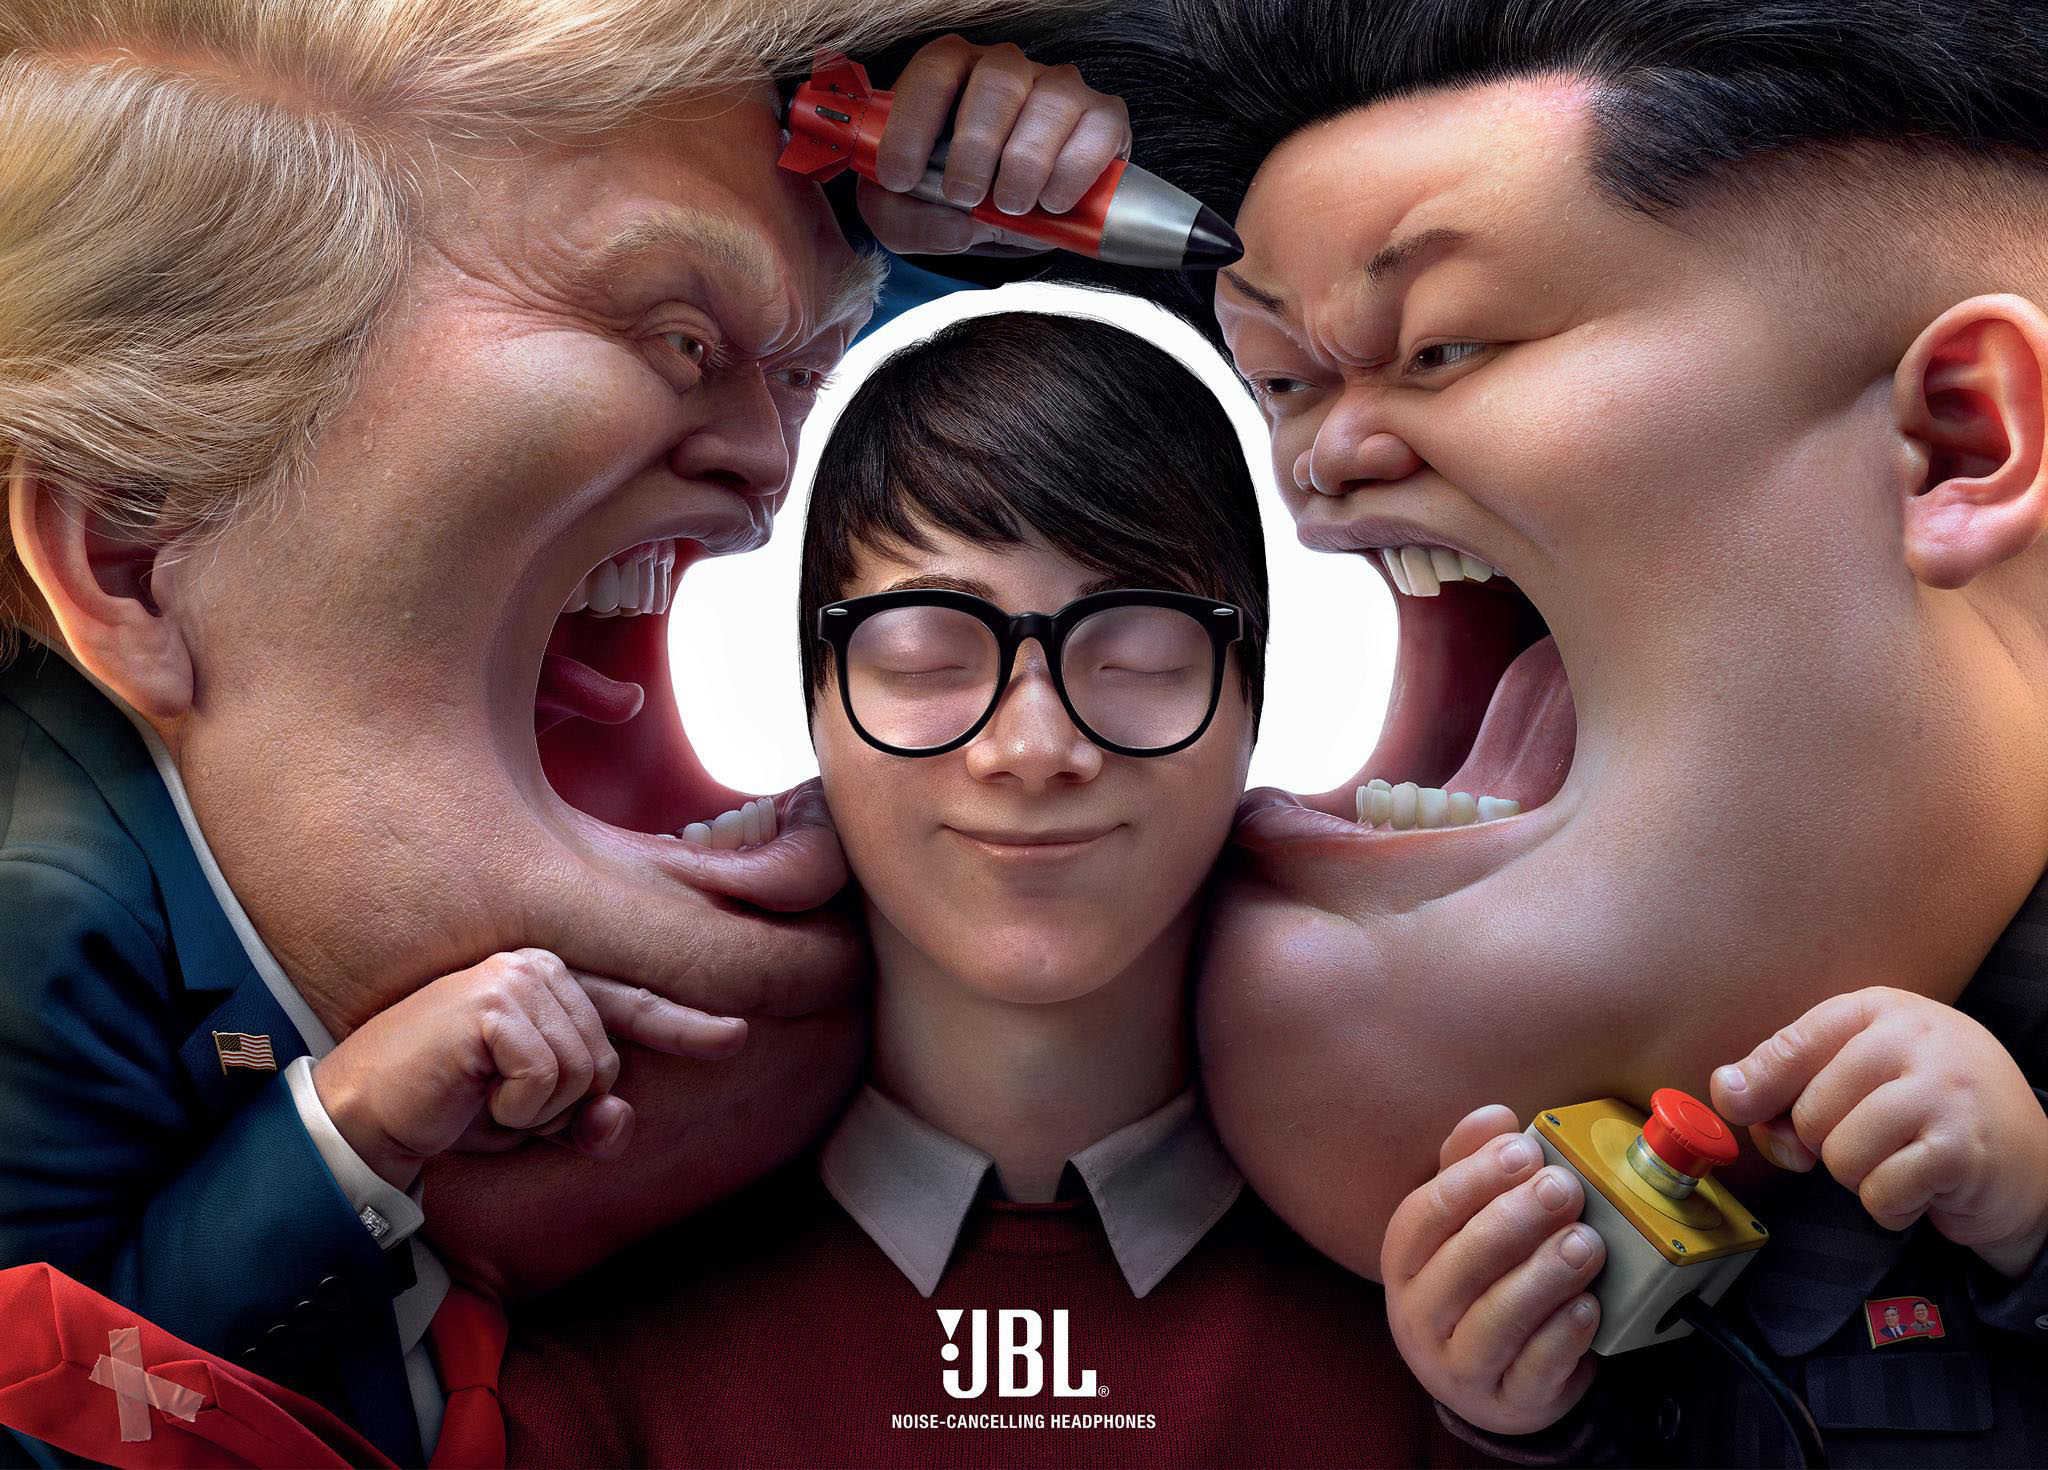 JBL Noise Cancelling Headphones - Donald Trump and Kim Jong Un